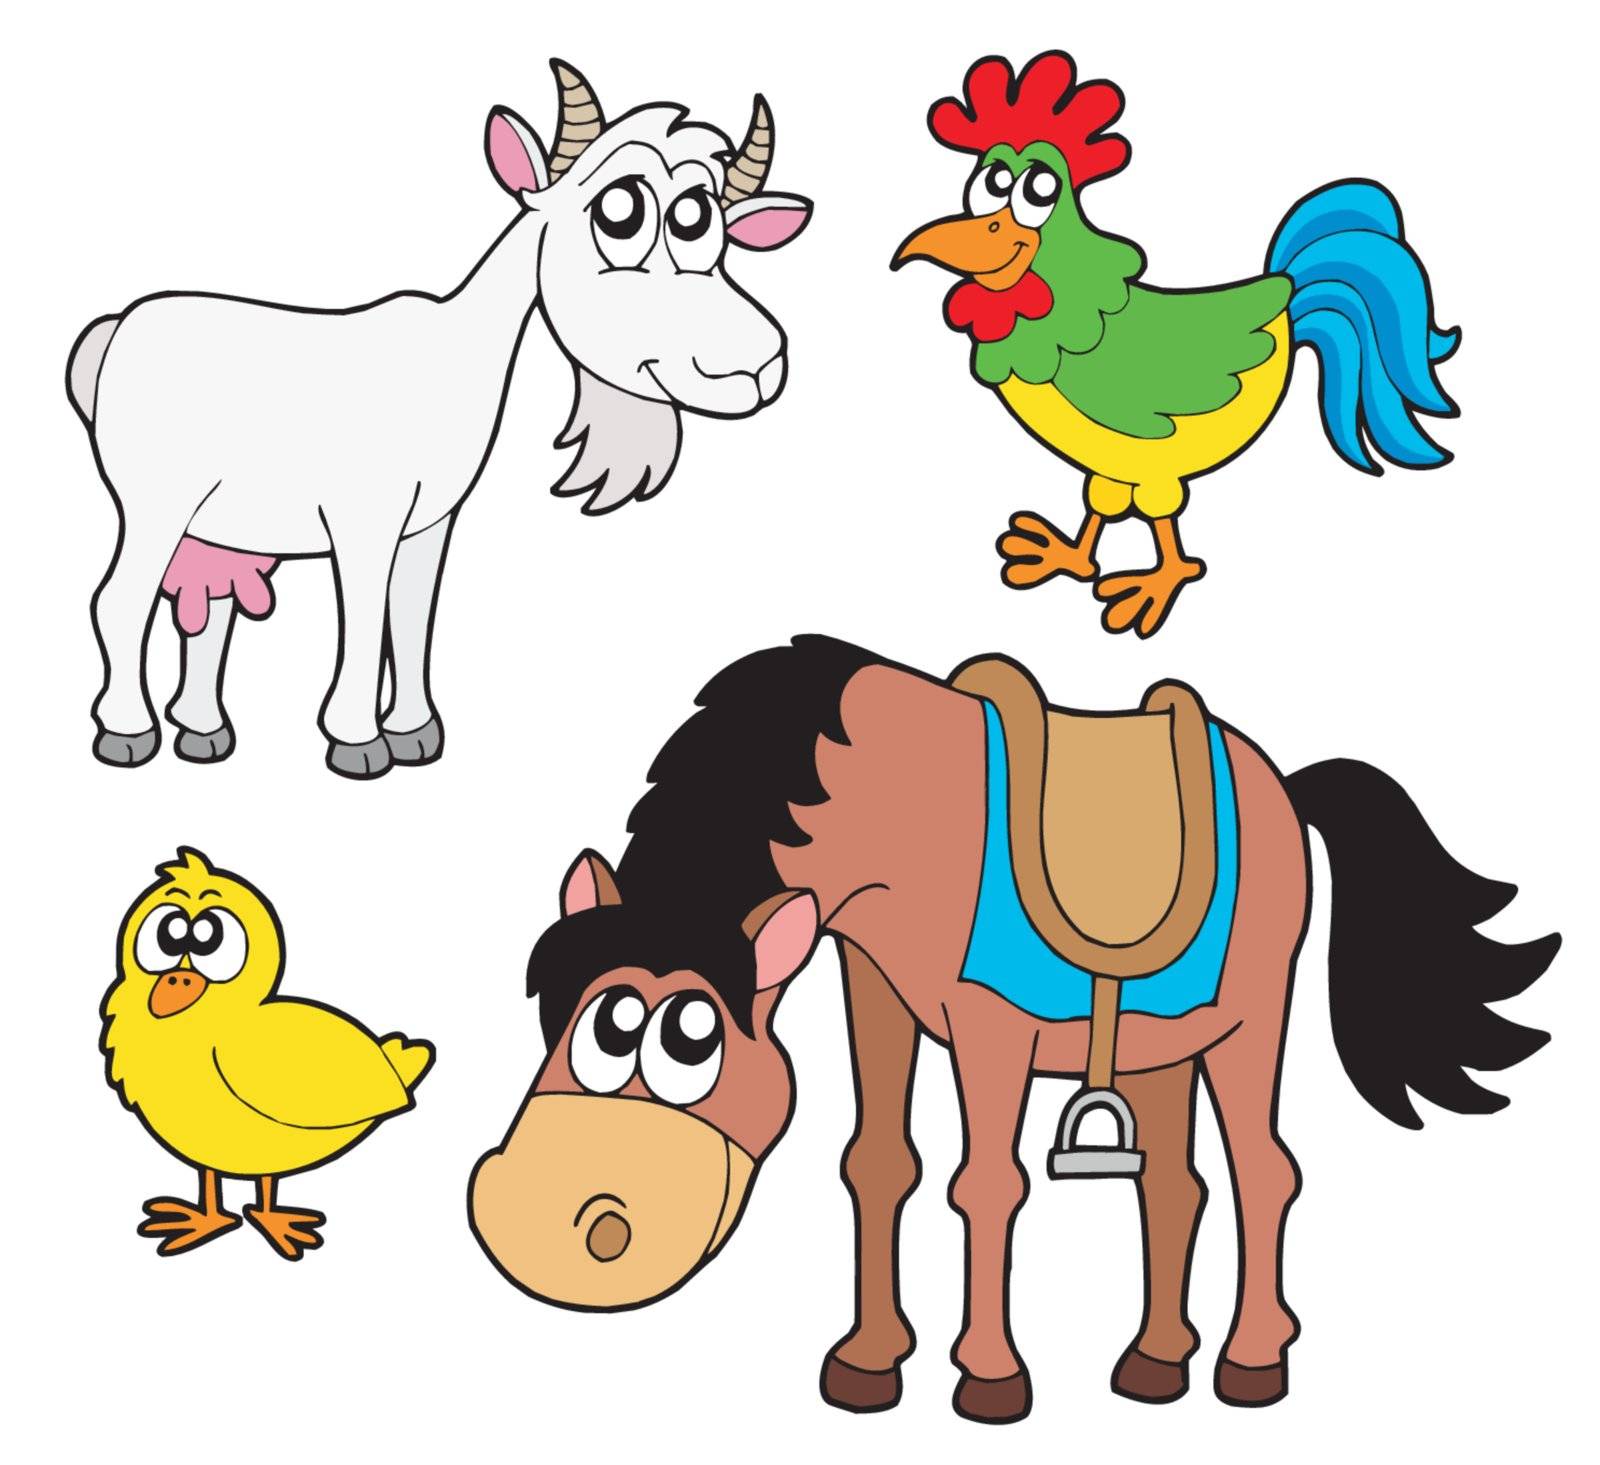 Farm animals collection 2 - vector illustration.